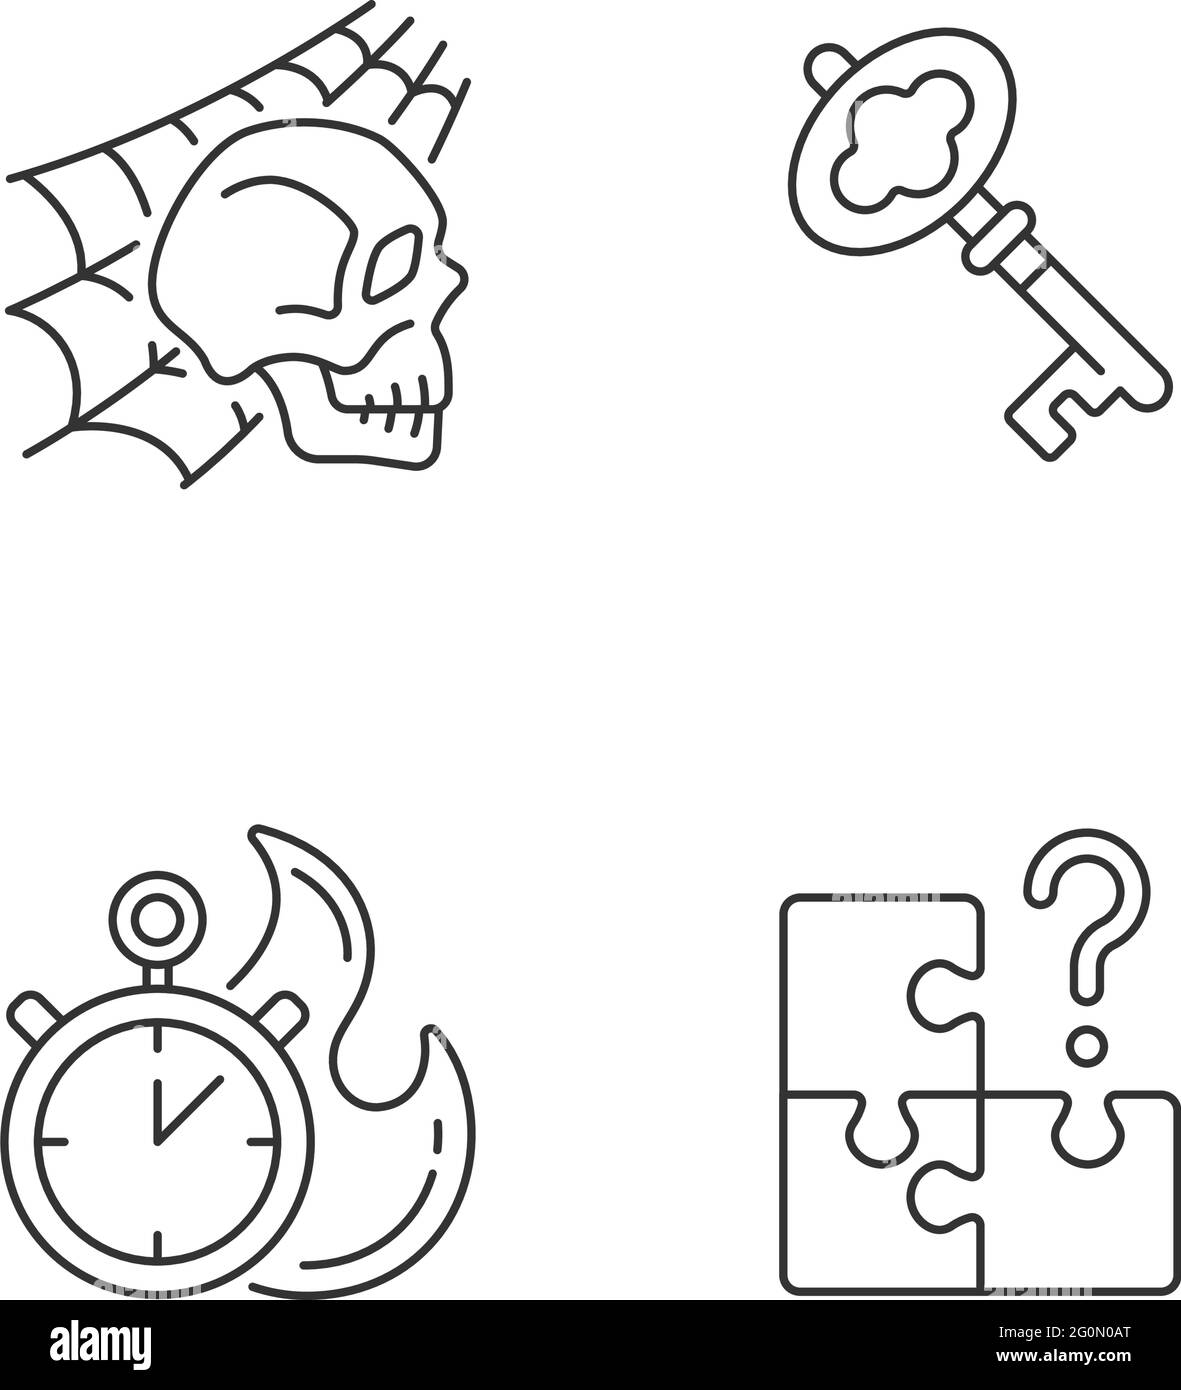 Lineare Symbole im Quest-Raum sind gesetzt Stock Vektor